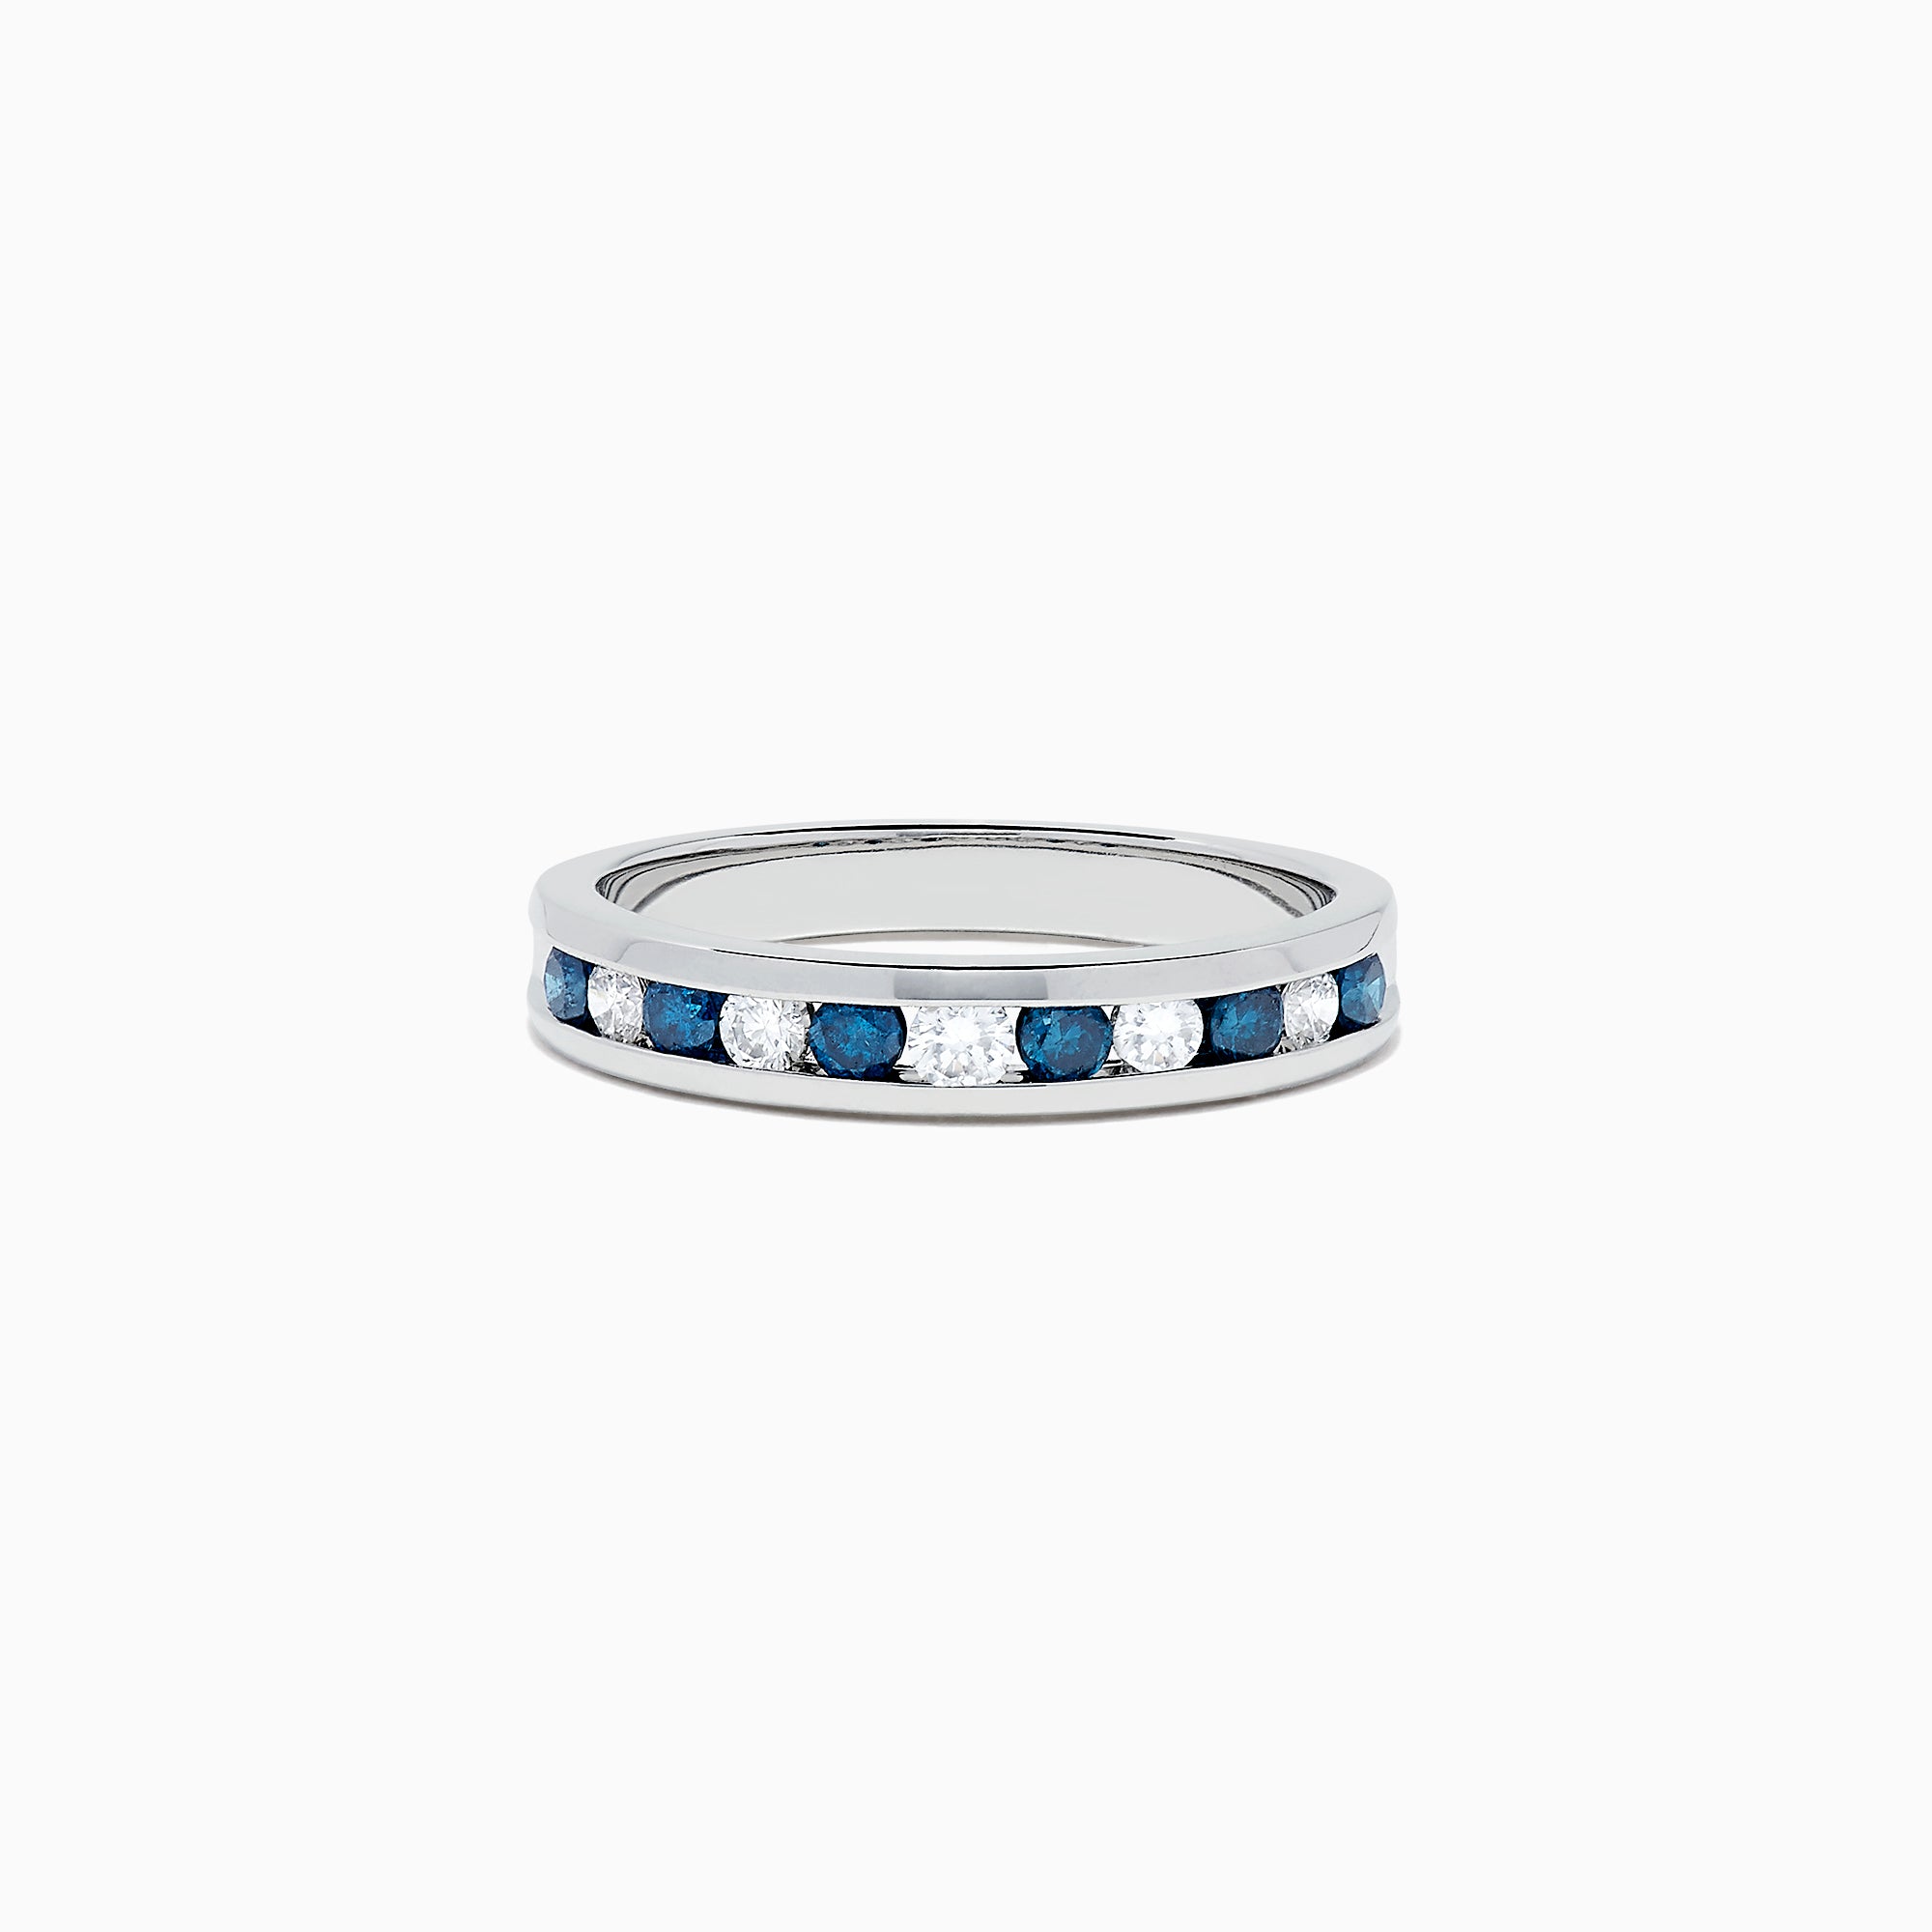 Effy Bella Bleu 14K White Gold Blue and White Diamond Ring, 0.50 TCW